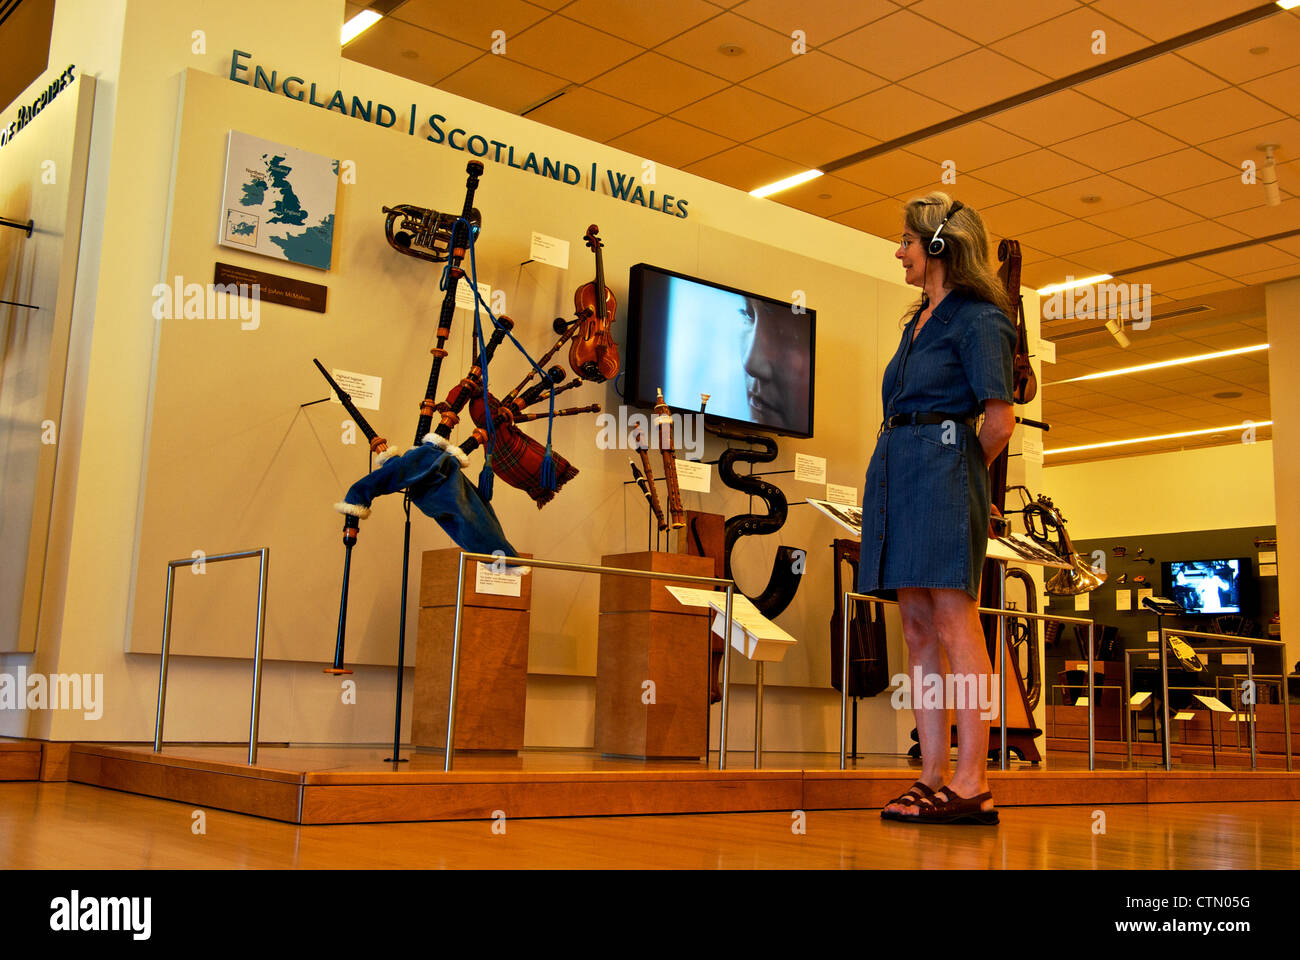 Woman examining England Scotland Wales bagpipe display Musical Instrument Museum Scottsdale AZ Stock Photo